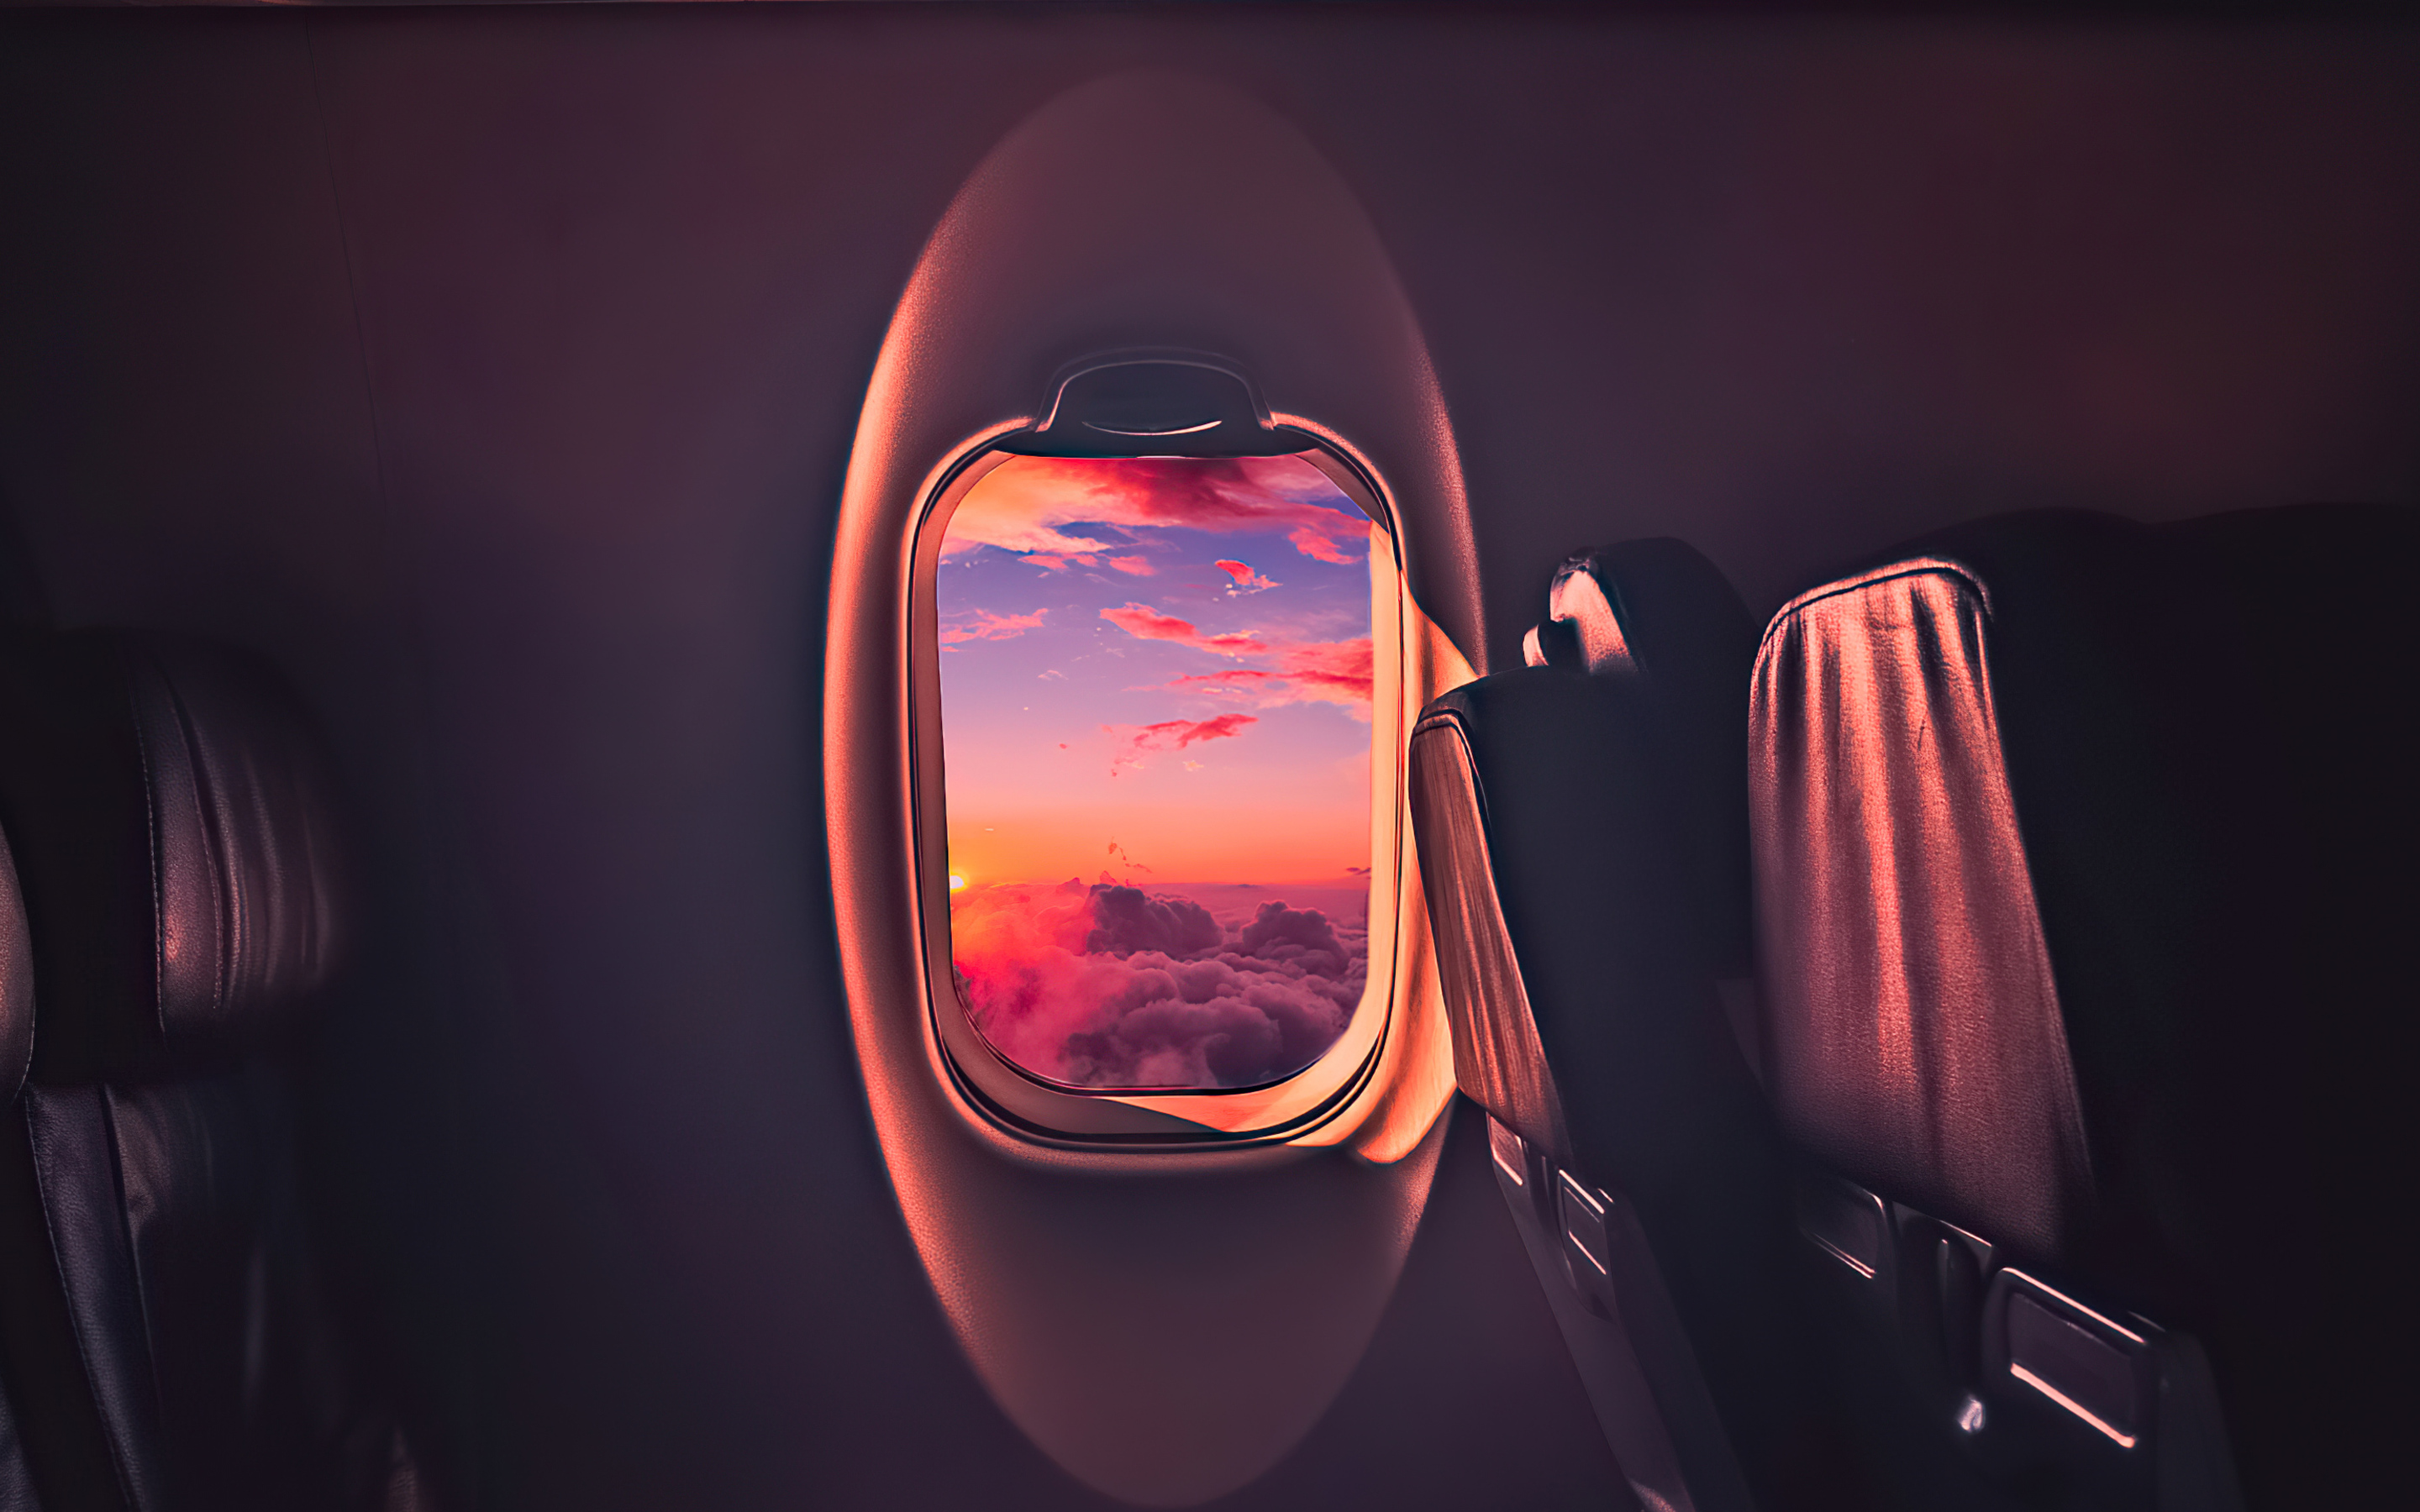 Beautiful Sunset Through Airplane Window Macbook Pro Retina HD 4k Wallpaper, Image, Background, Photo and Picture